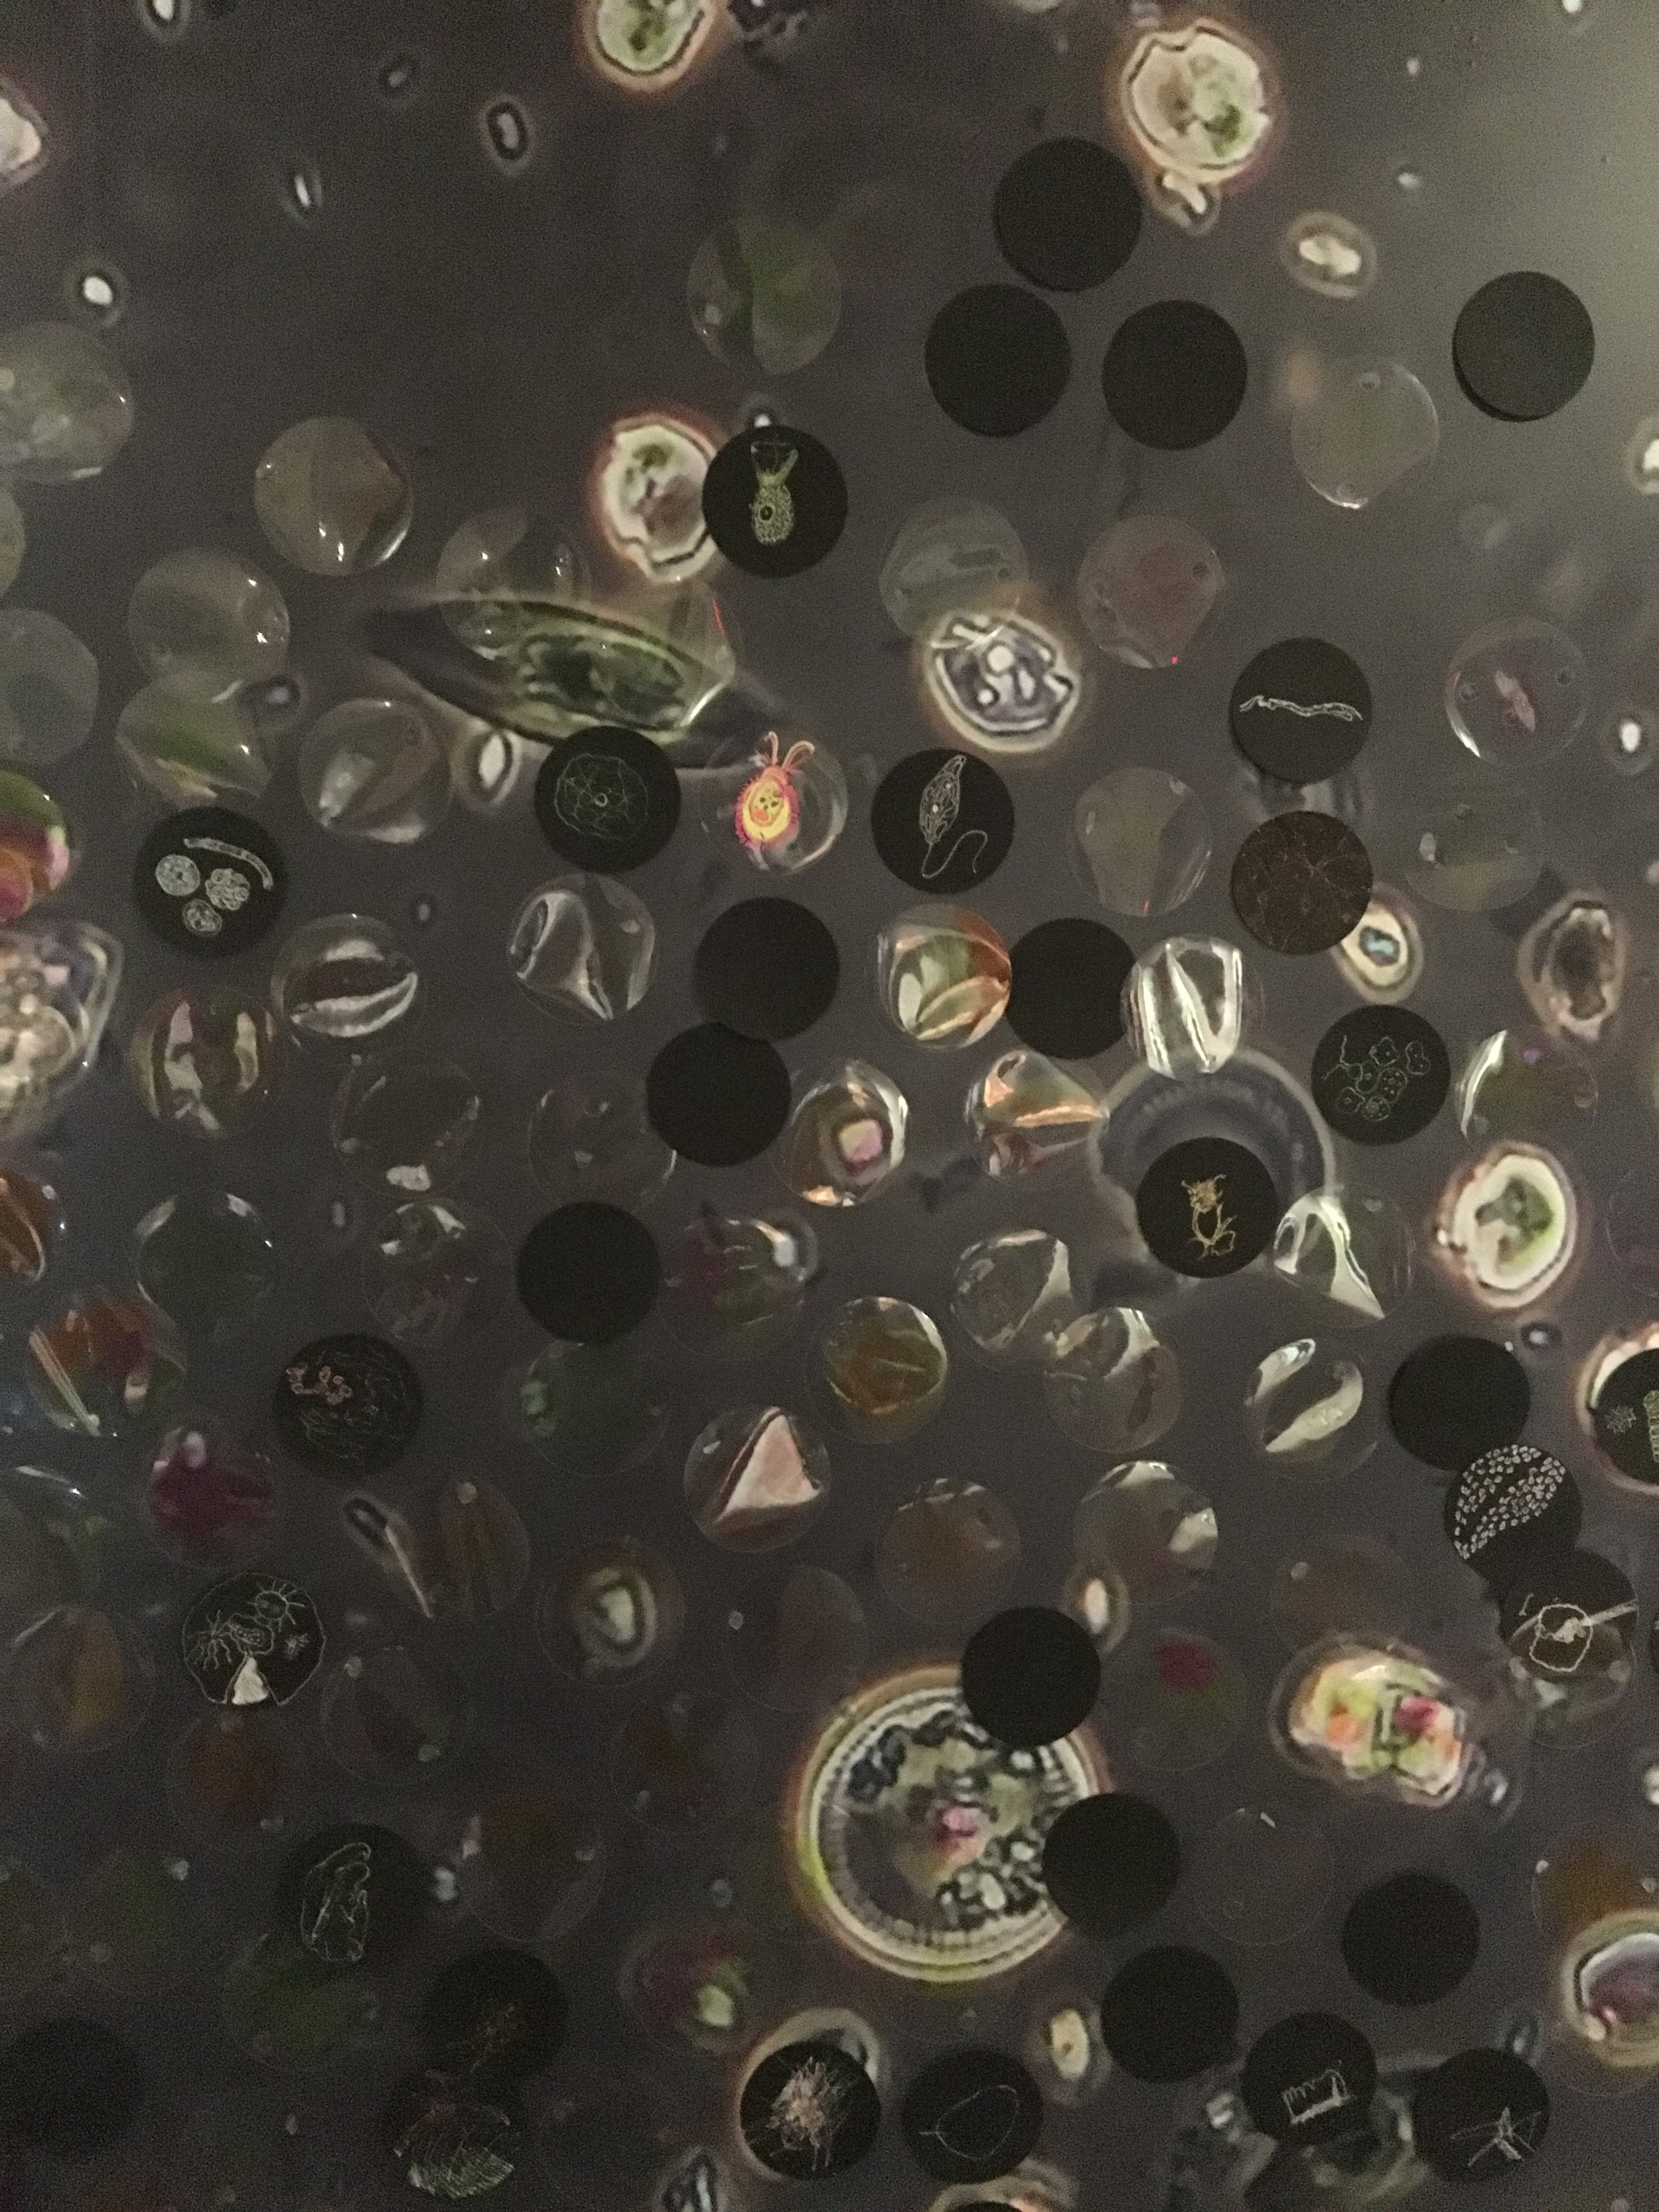 Petri Dish Wall - "Hidden in Plain View"